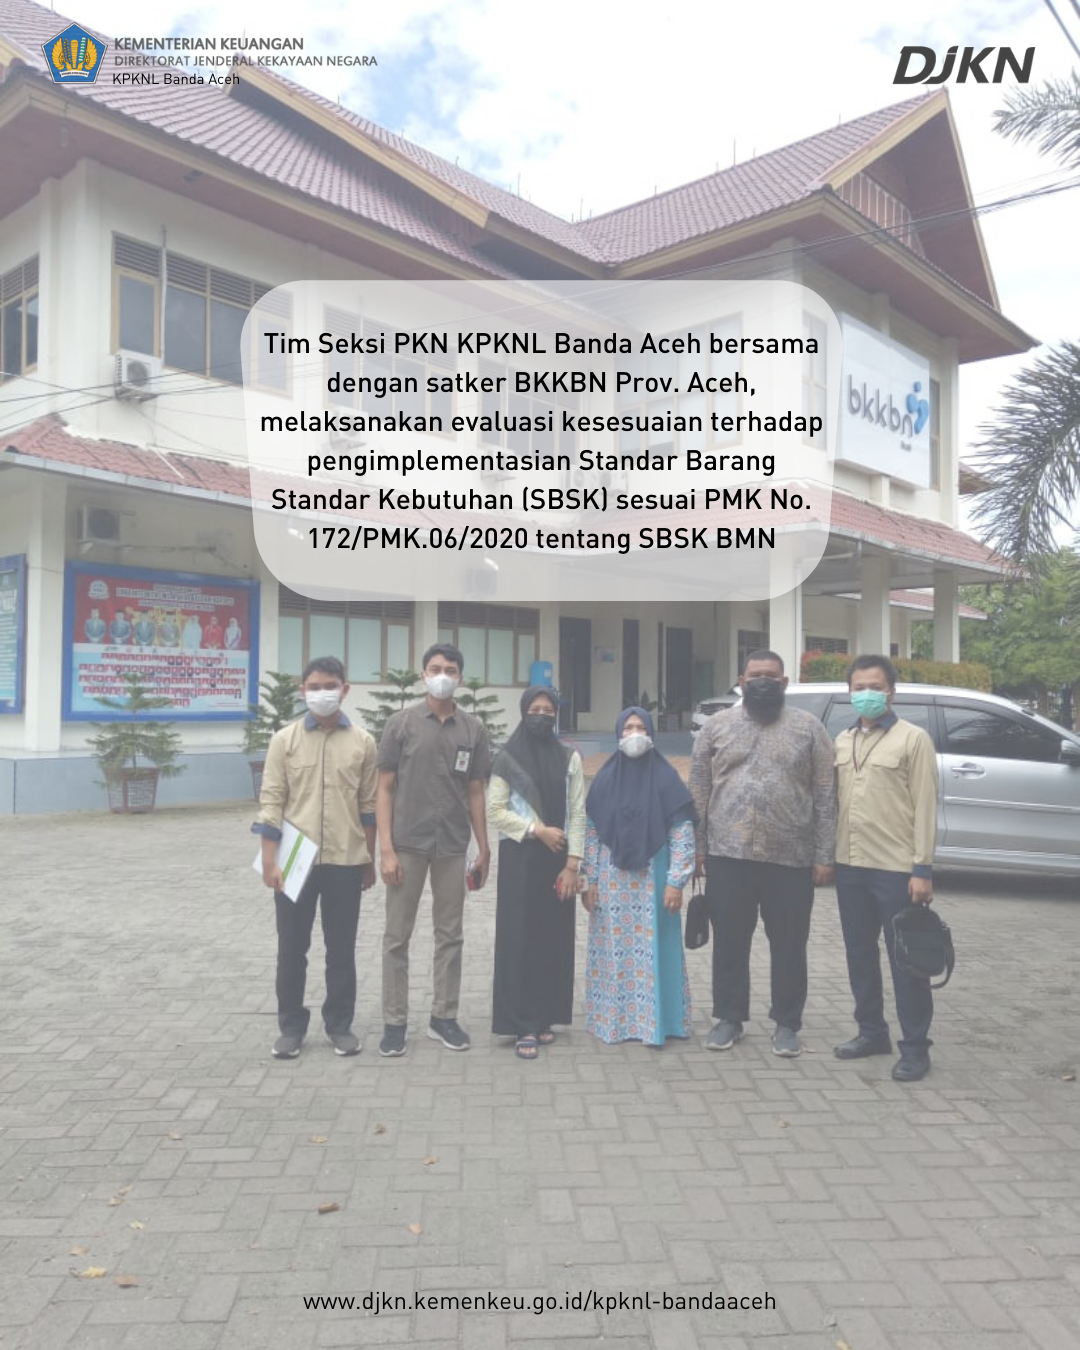 KPKNL Banda Aceh Laksanakan Evaluasi SBSK BMN Pada BKKBN Prov. Aceh